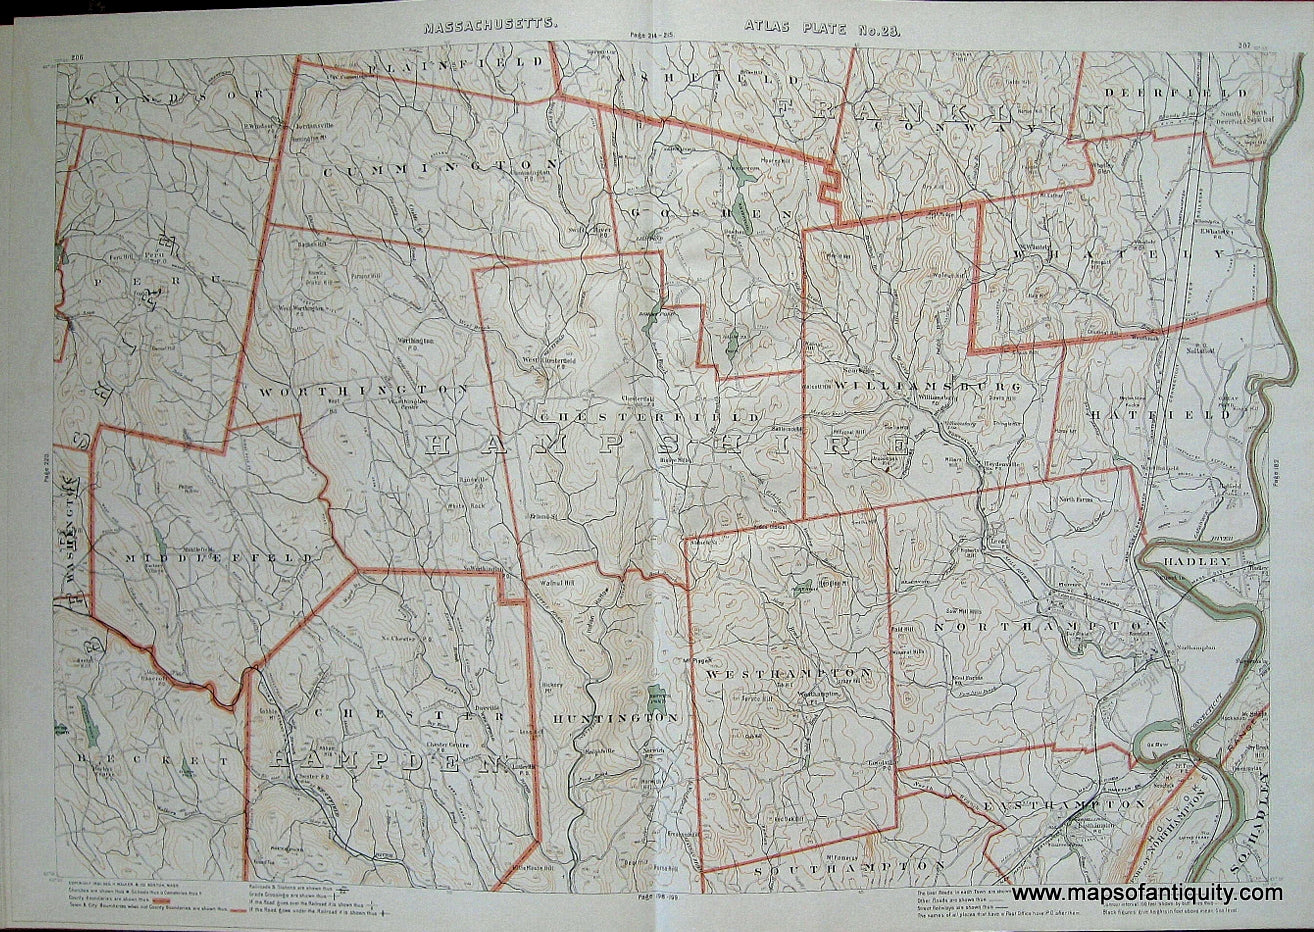 Antique-Printed-Color-Map-Massachusetts-Atlas-Plate-No.-23-US-Massachusetts-Massachusetts-General-1891-G.-H.-Walker-Maps-Of-Antiquity